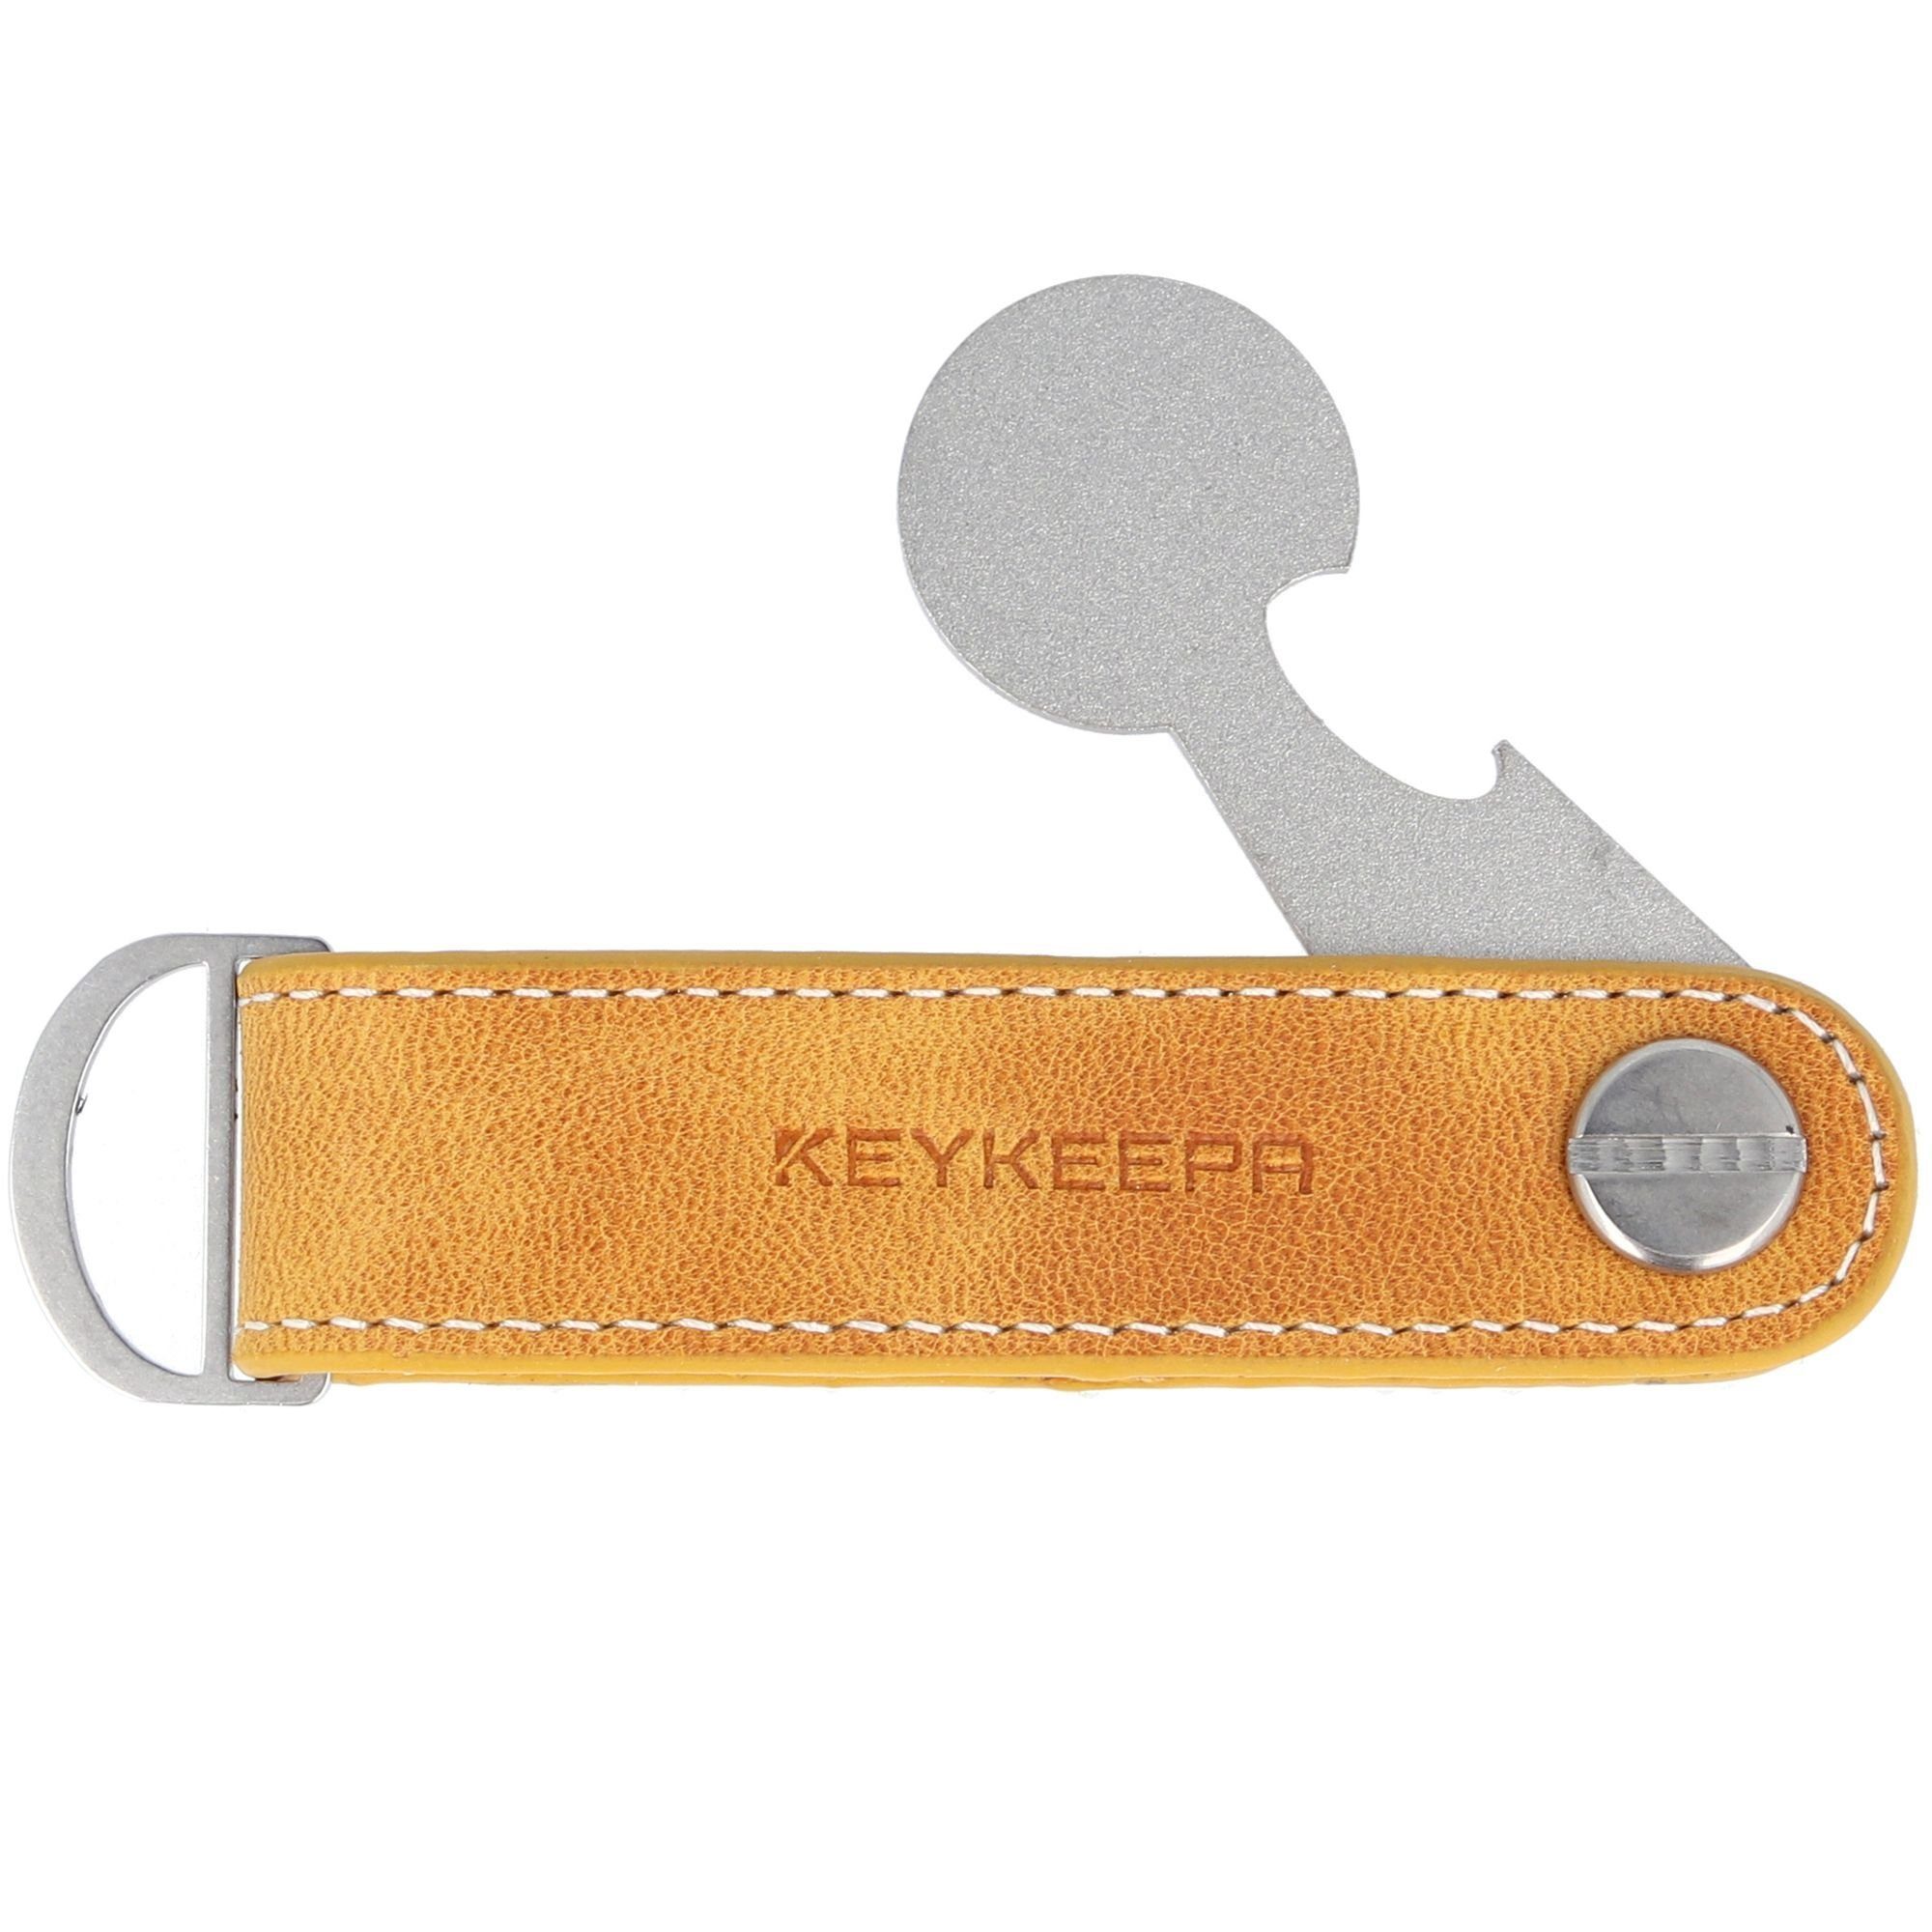 Keykeepa Schlüsseltasche Loop, Leder squash yellow